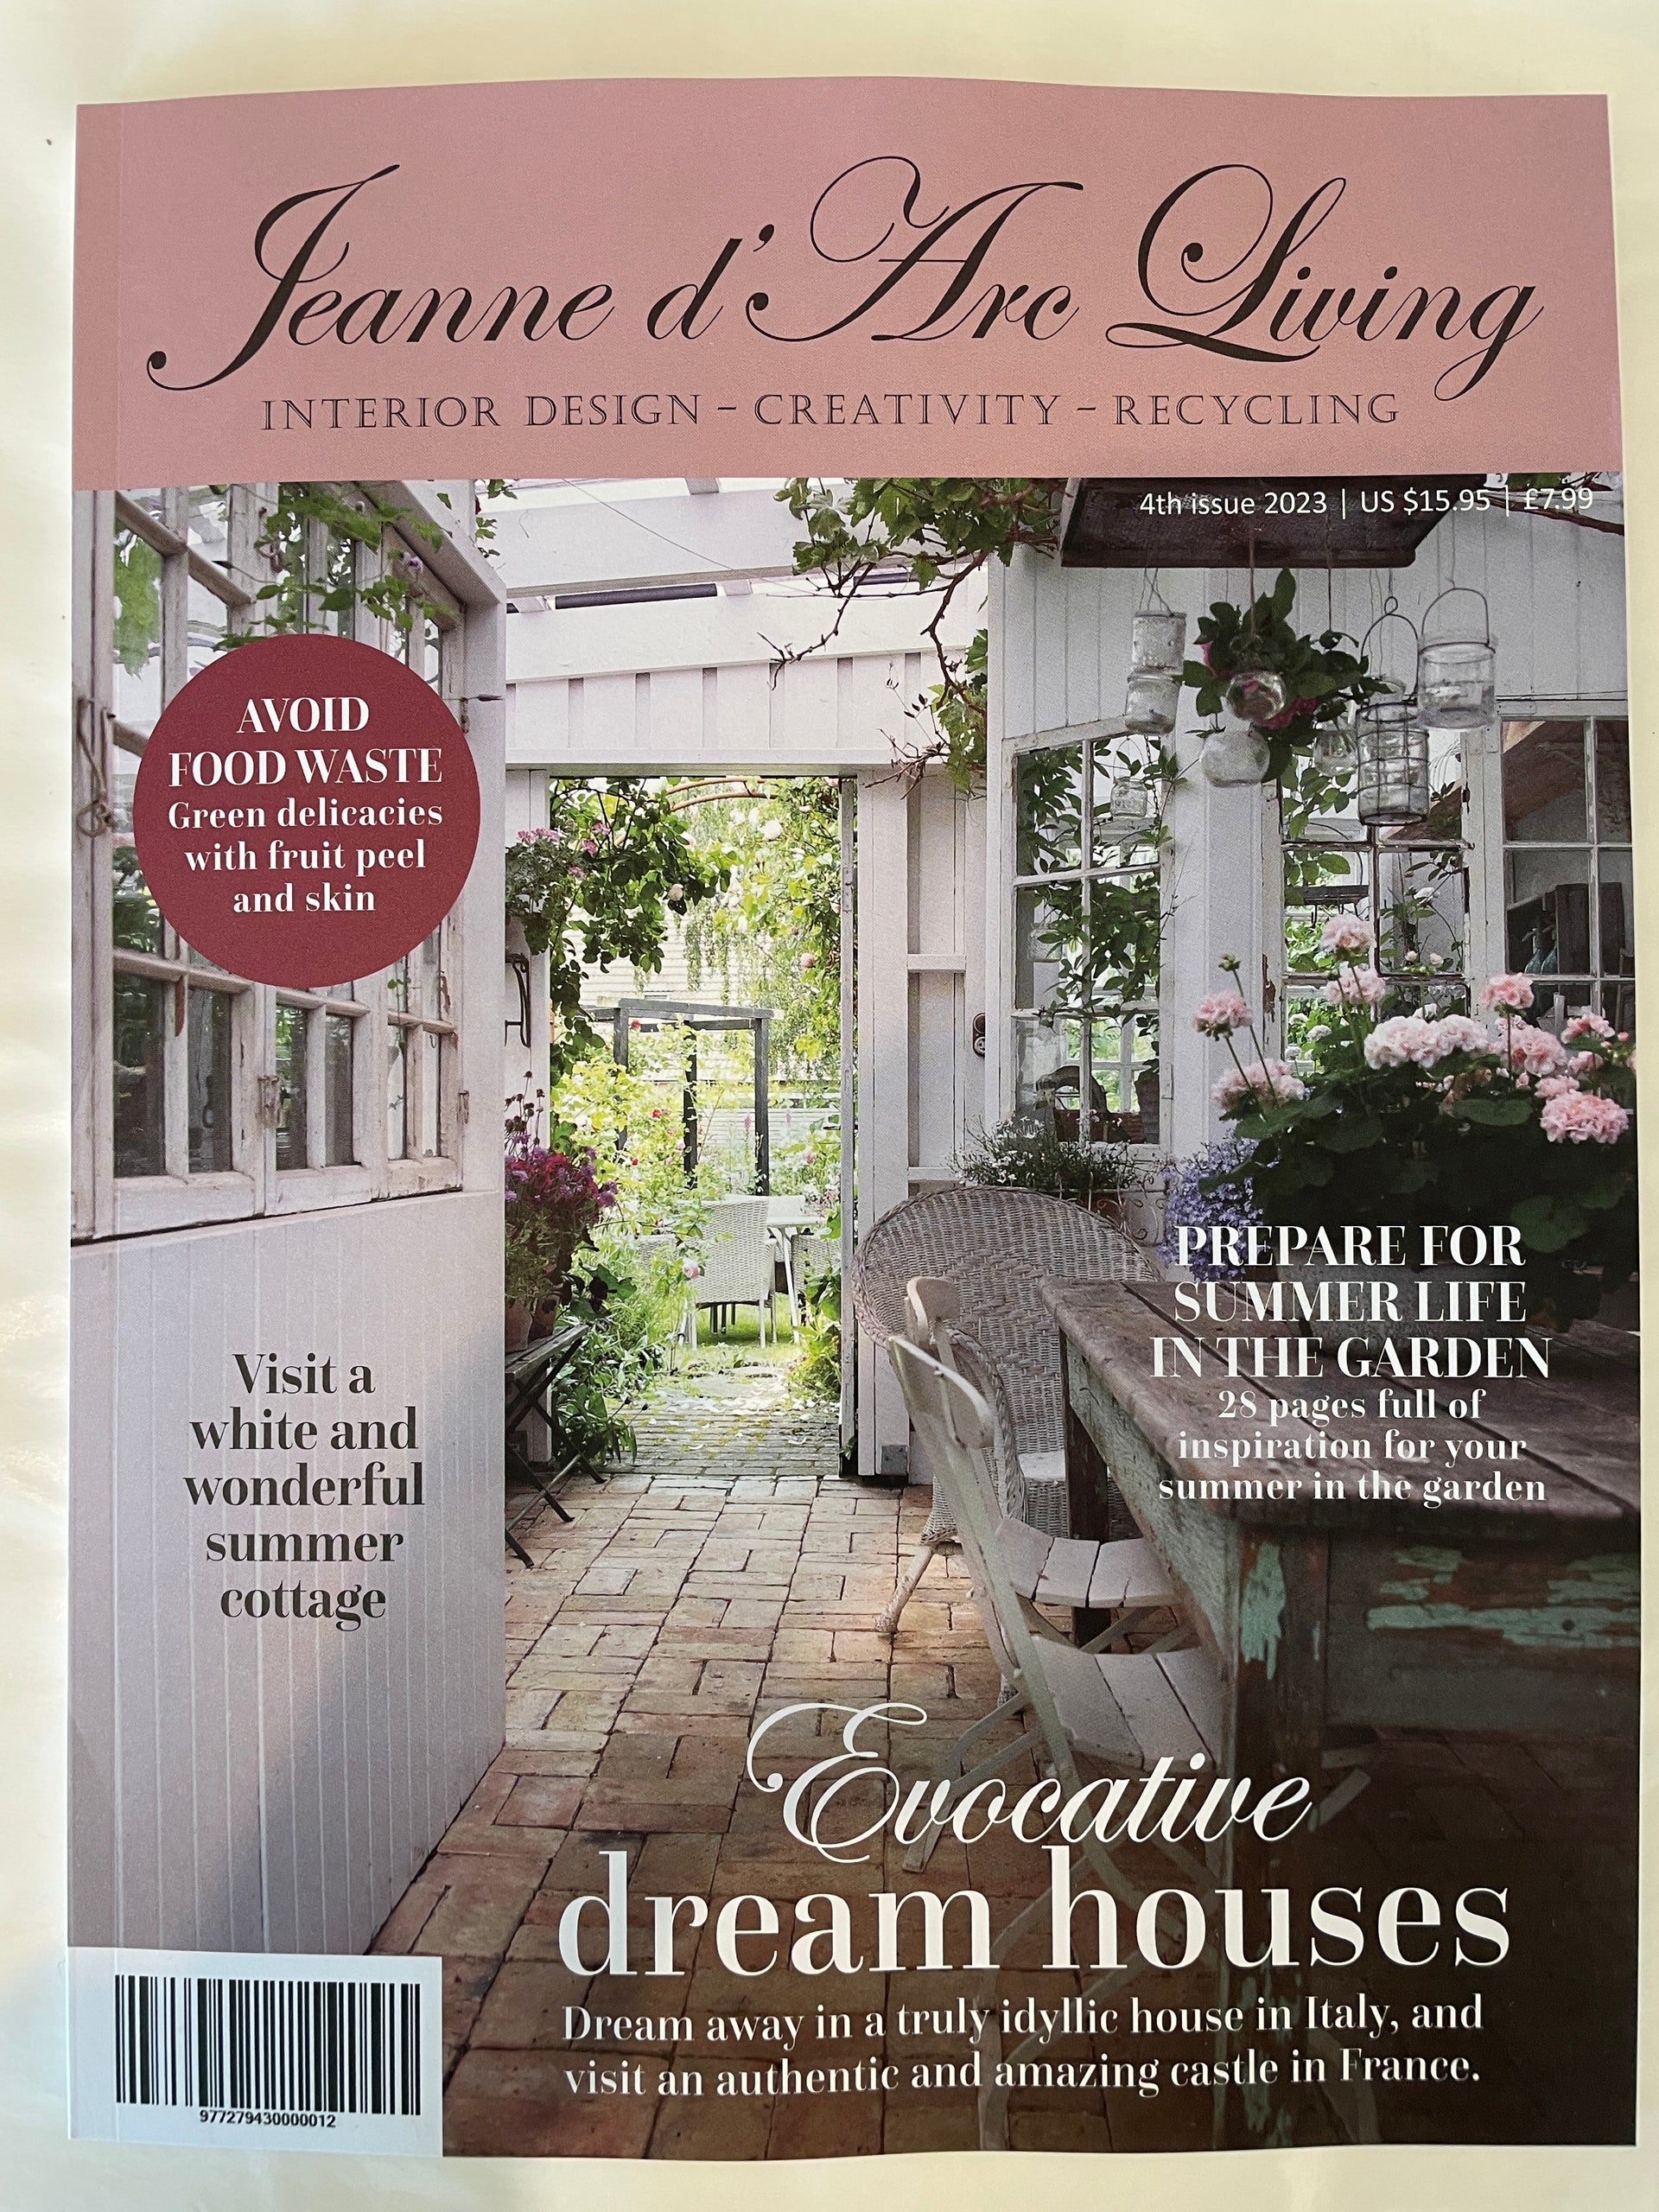 Jeanne d'Arc Living Magazine - 2023 Vol 4. Evocative Dream Houses